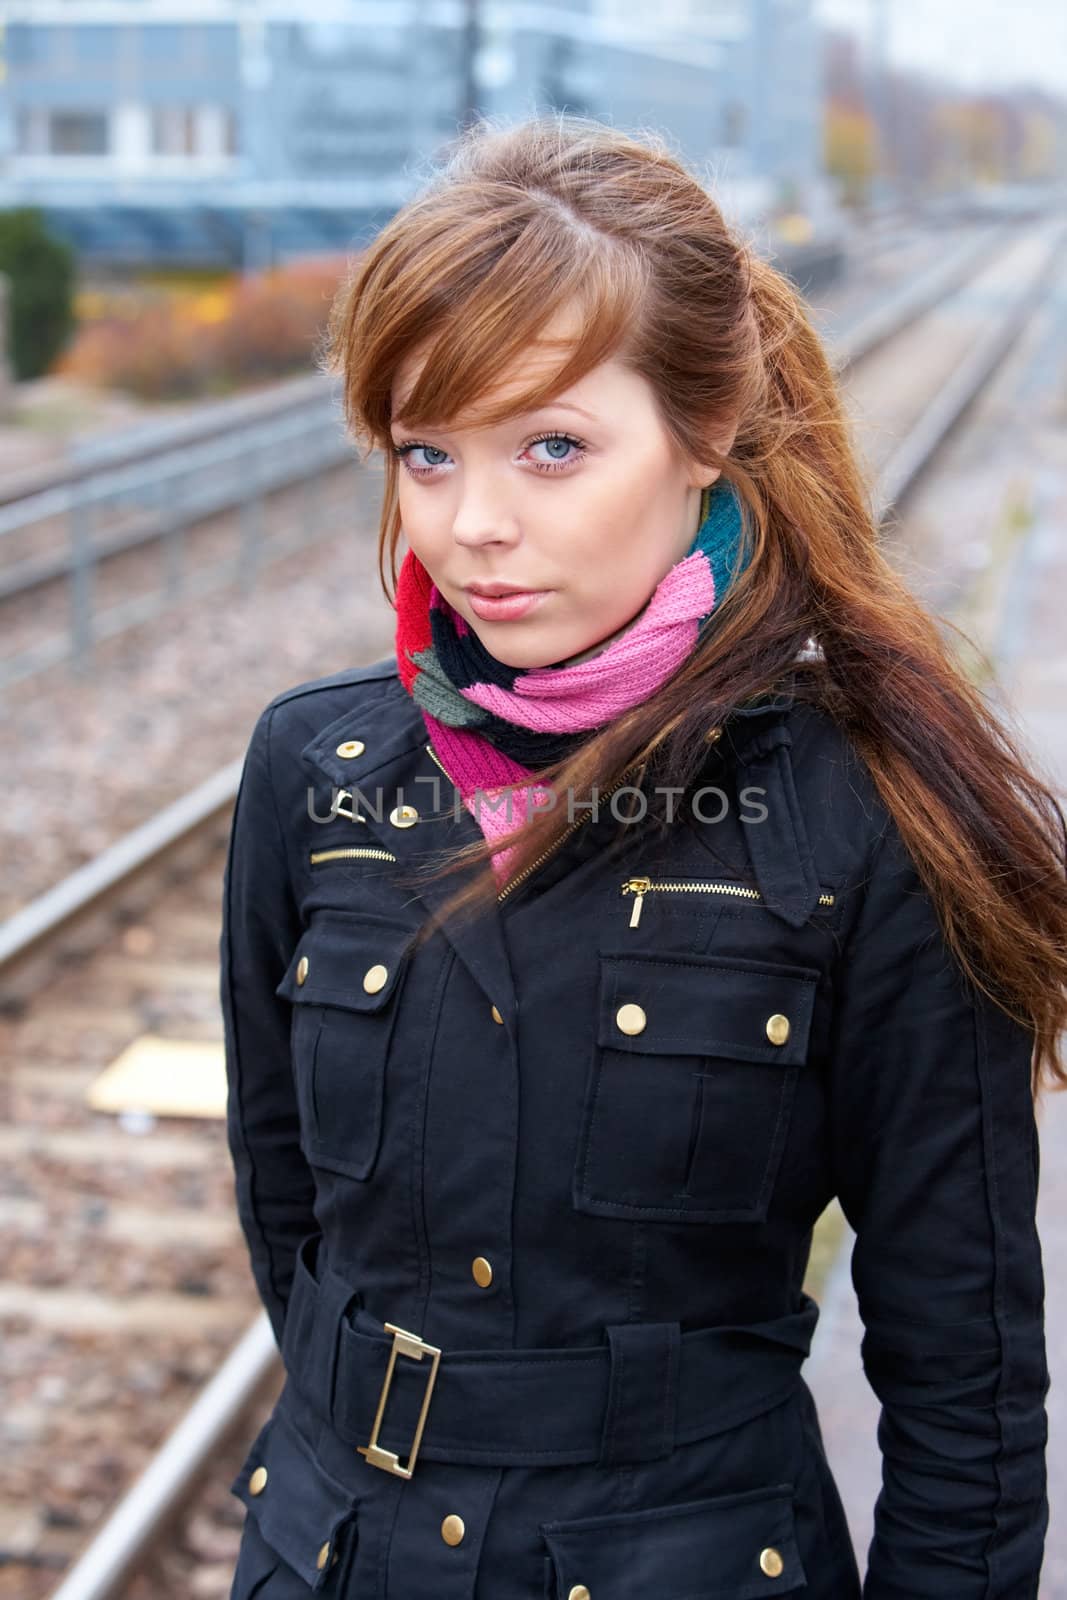 Teenage Girl At Platform by Luminis